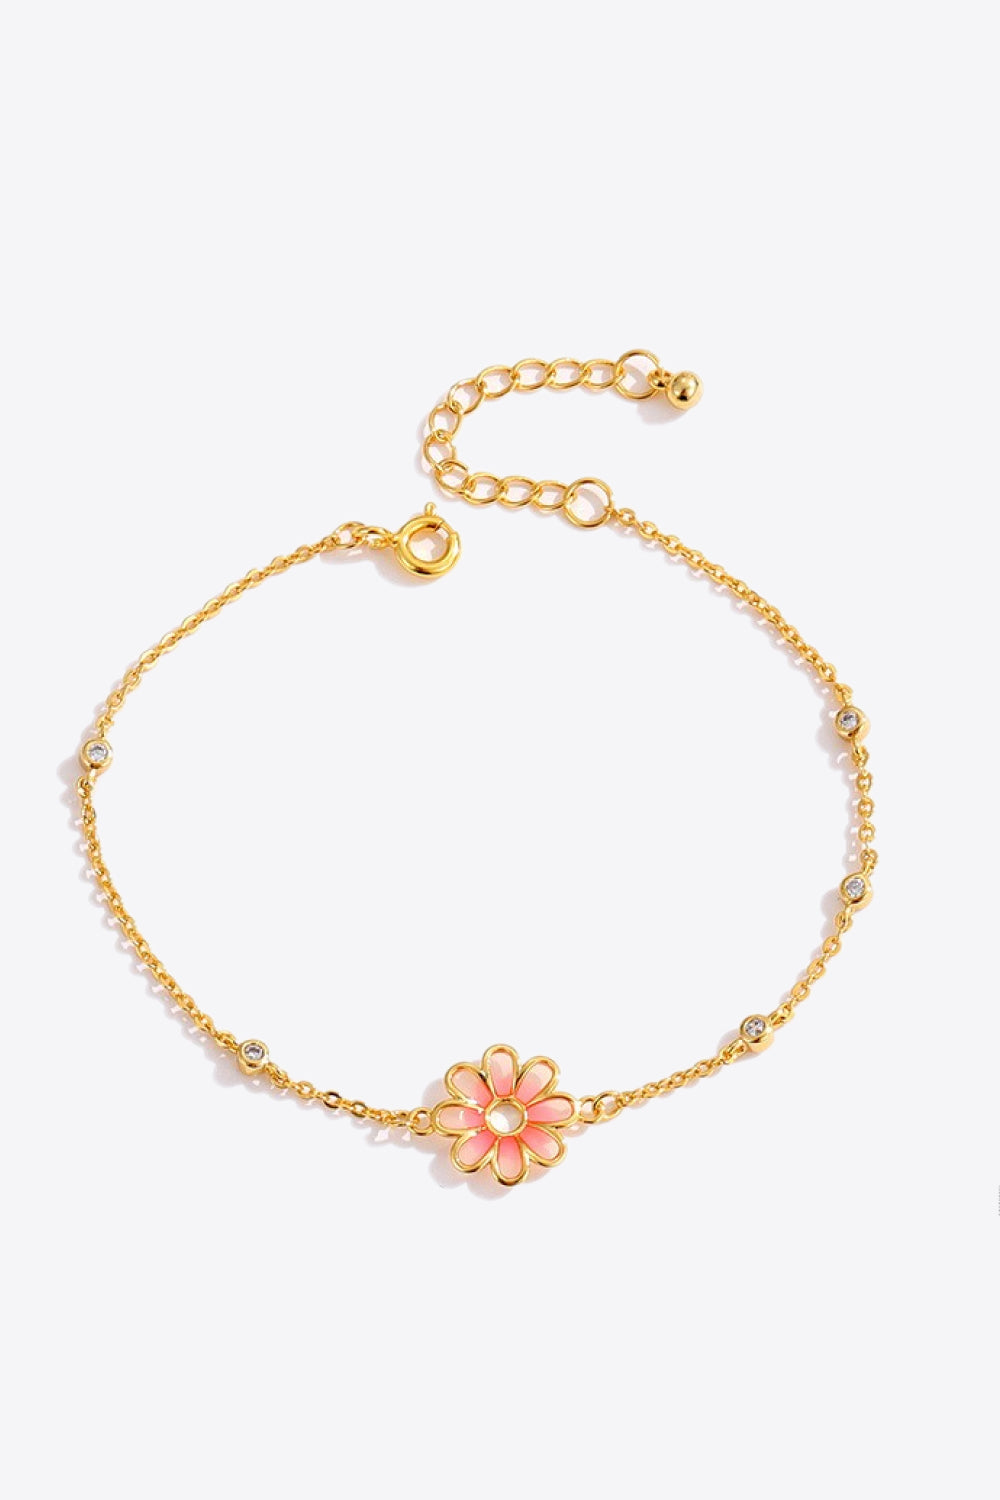 Flower Chain Bracelet - Bracelets - FITGGINS